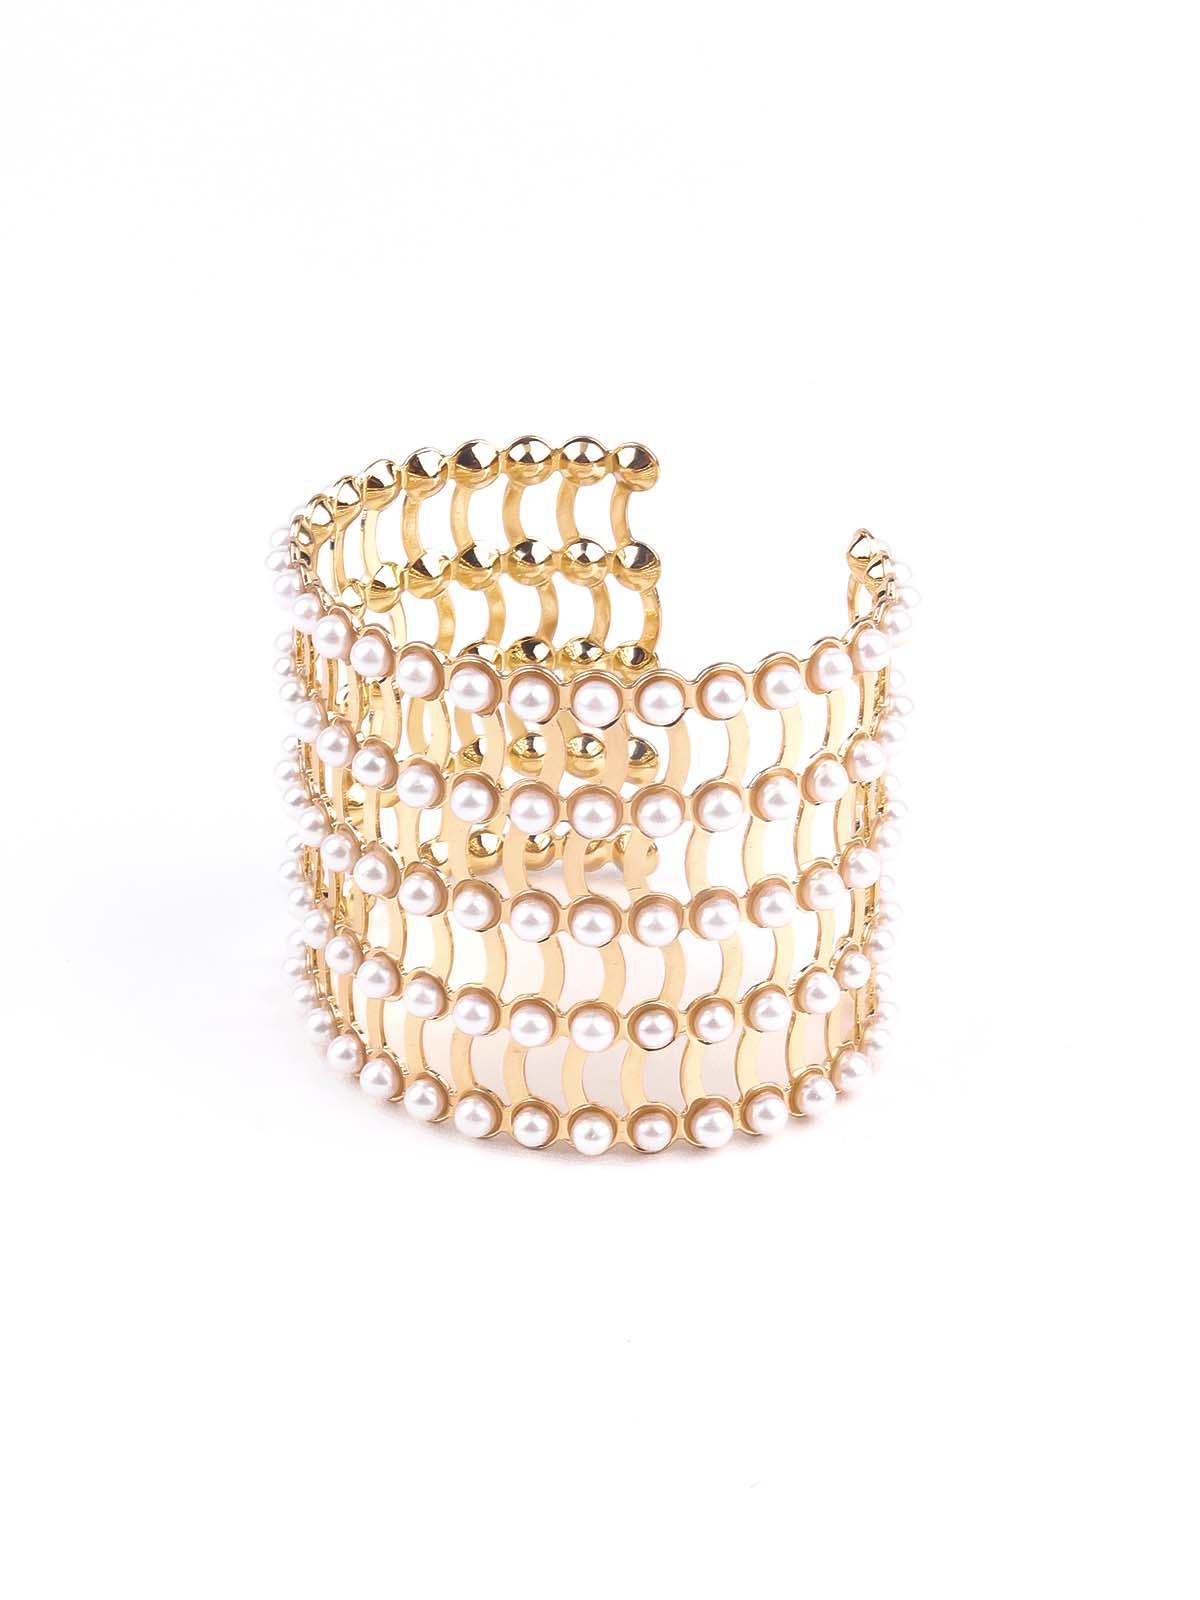 Wide gold tone hand cuff bracelet - Odette